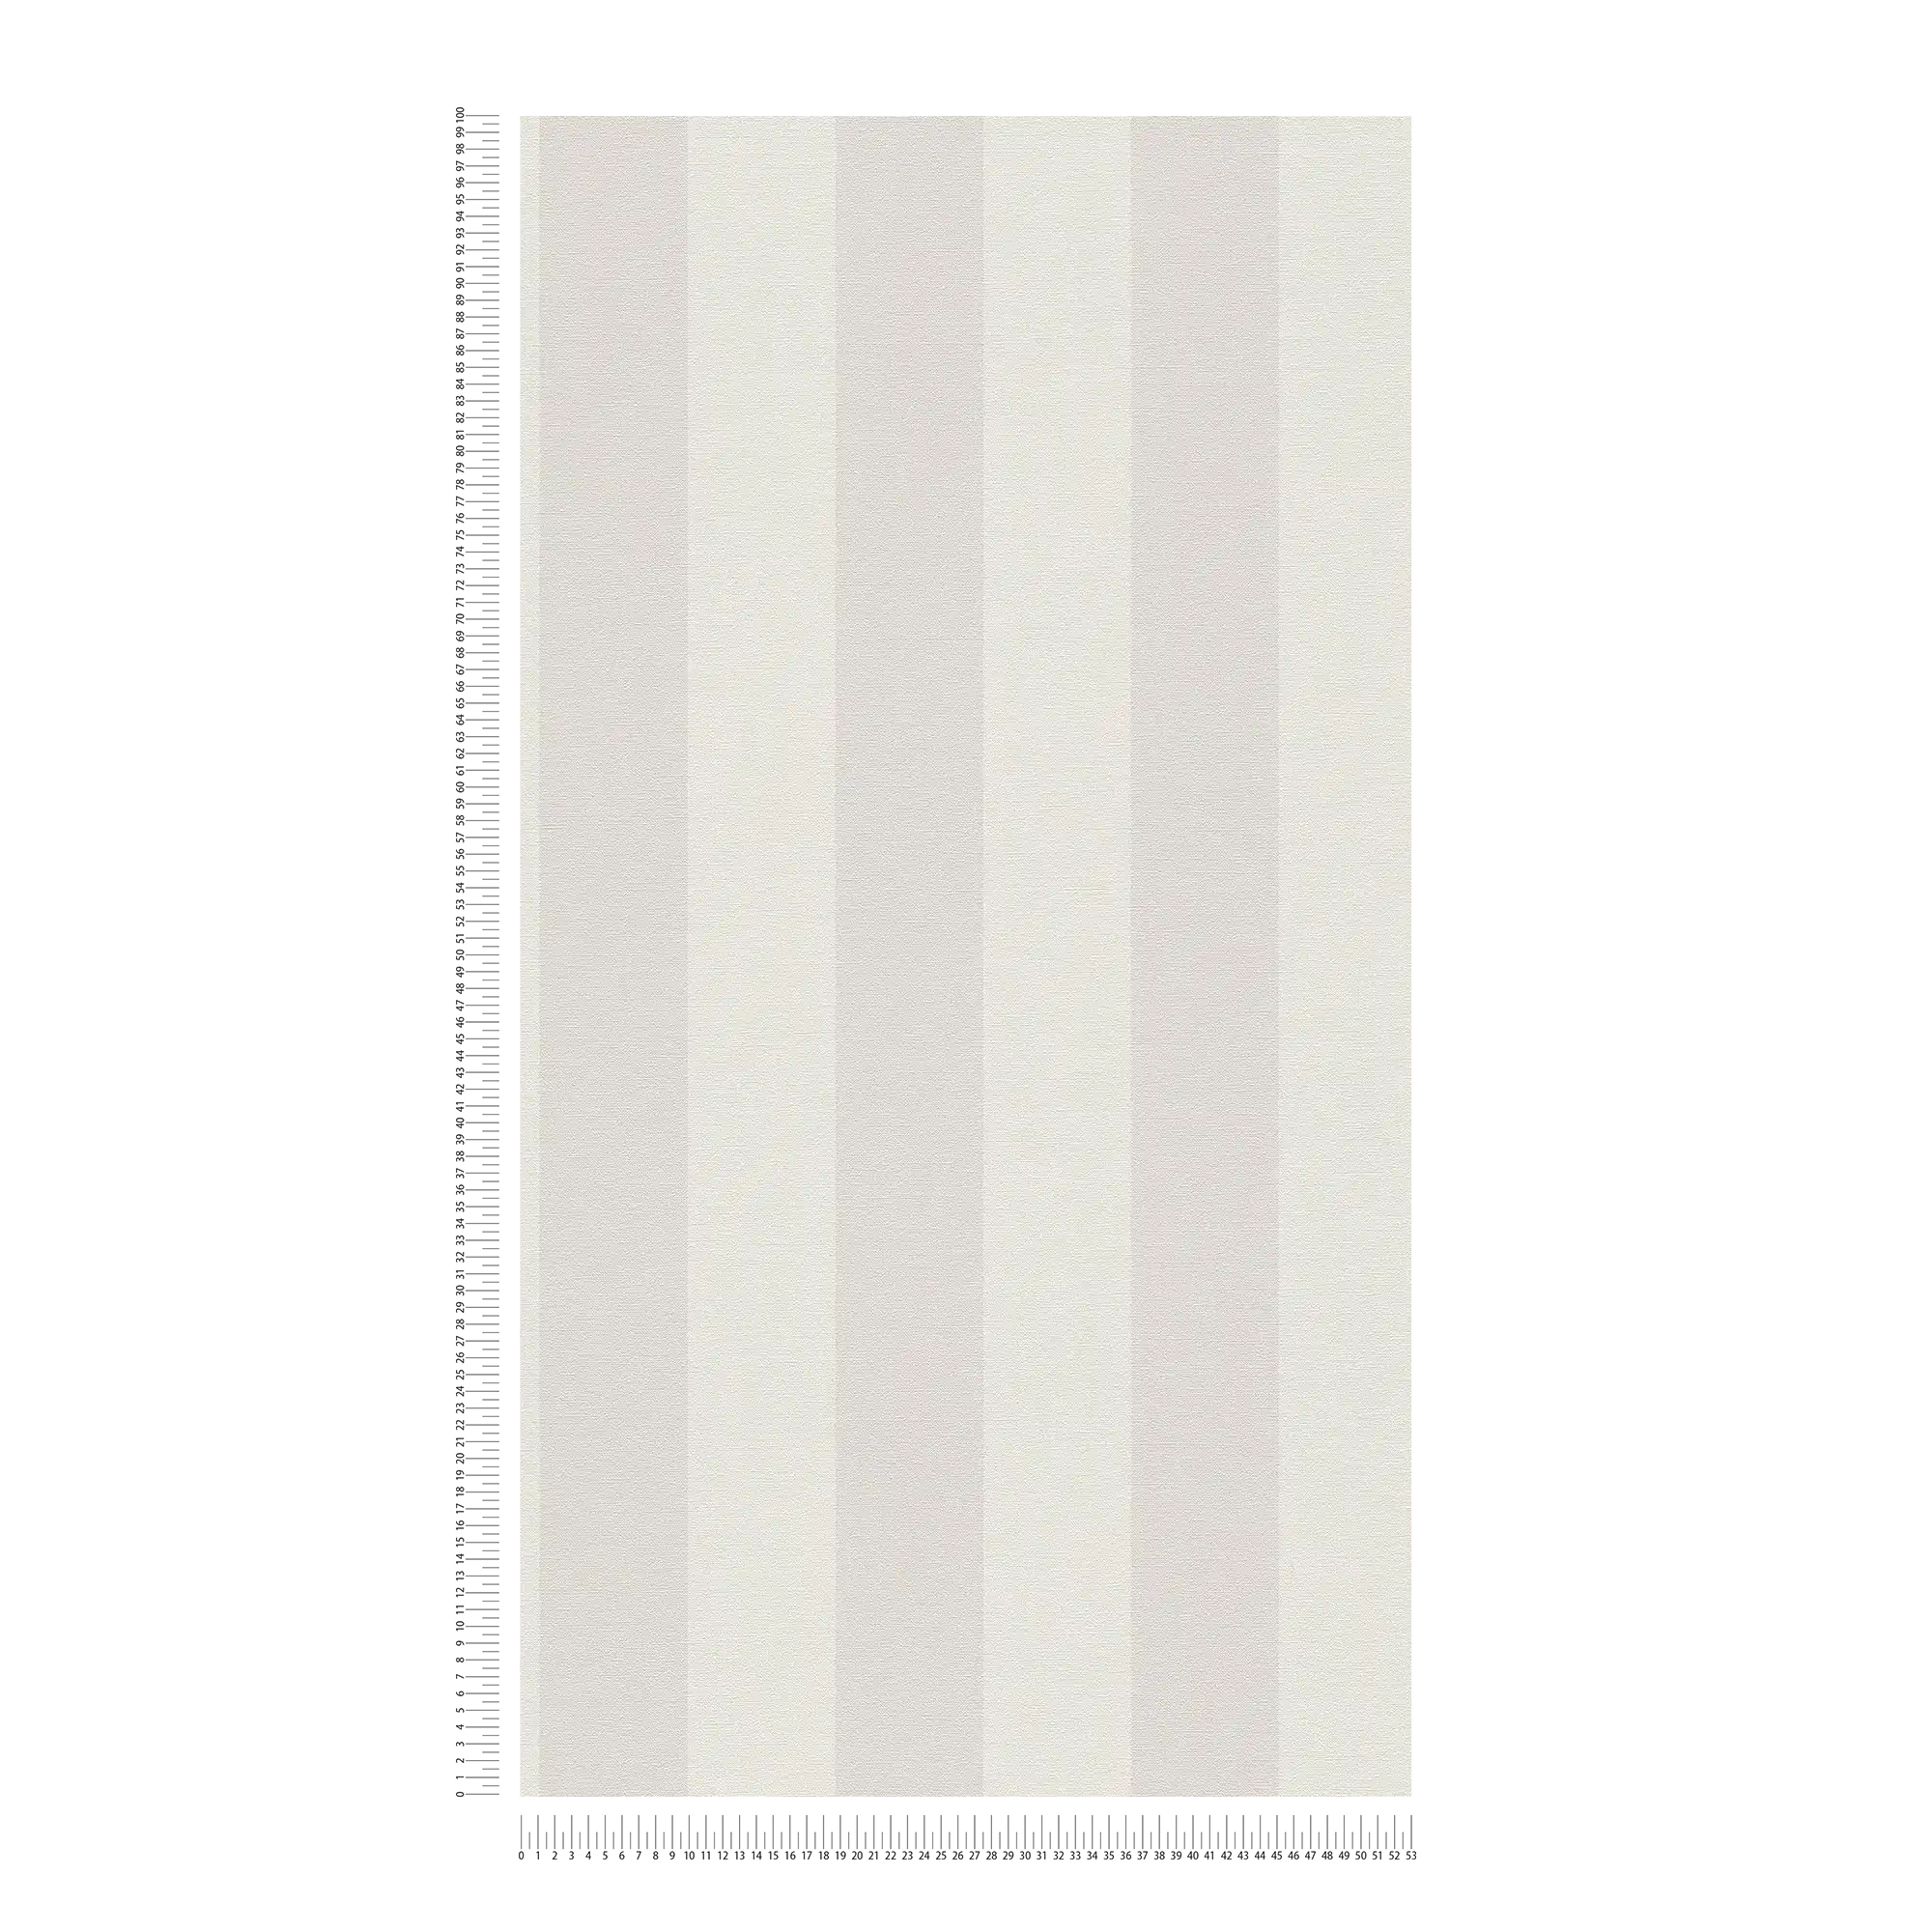             Streifen Vliestapete mit Leinenoptik PVC-frei – Grau, Weiß
        